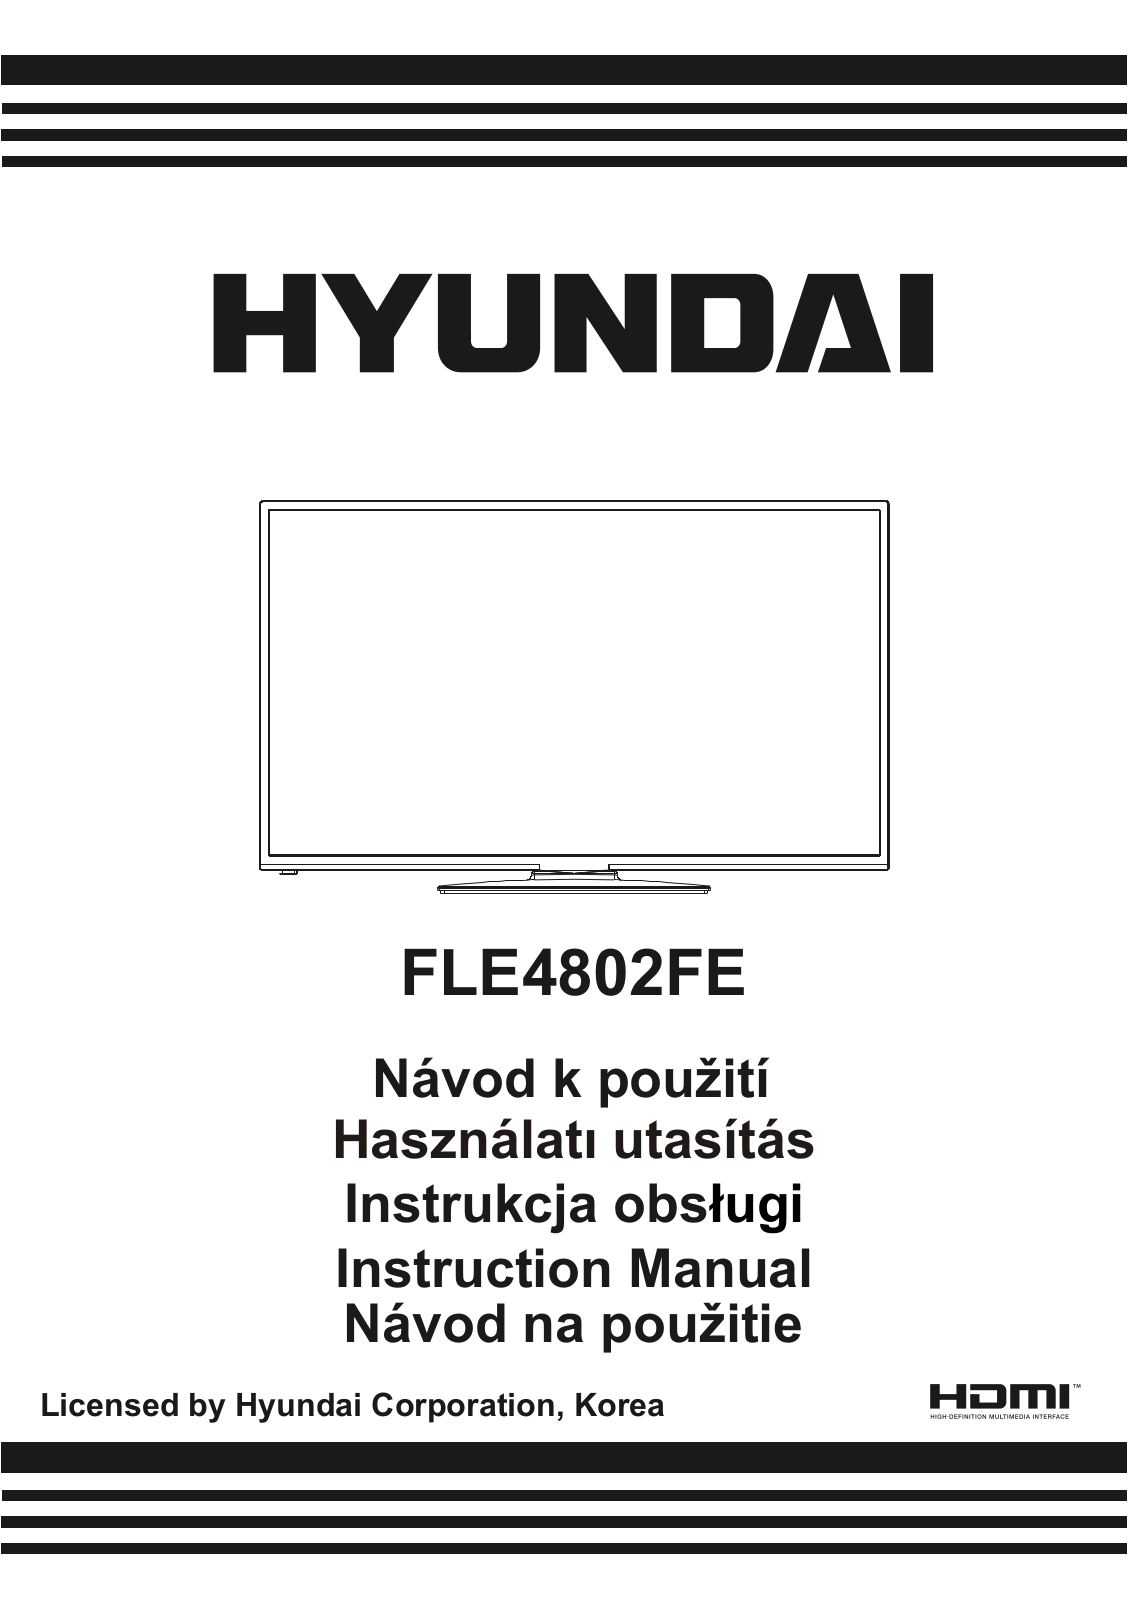 Hyundai FLE 4802 FE User Manual